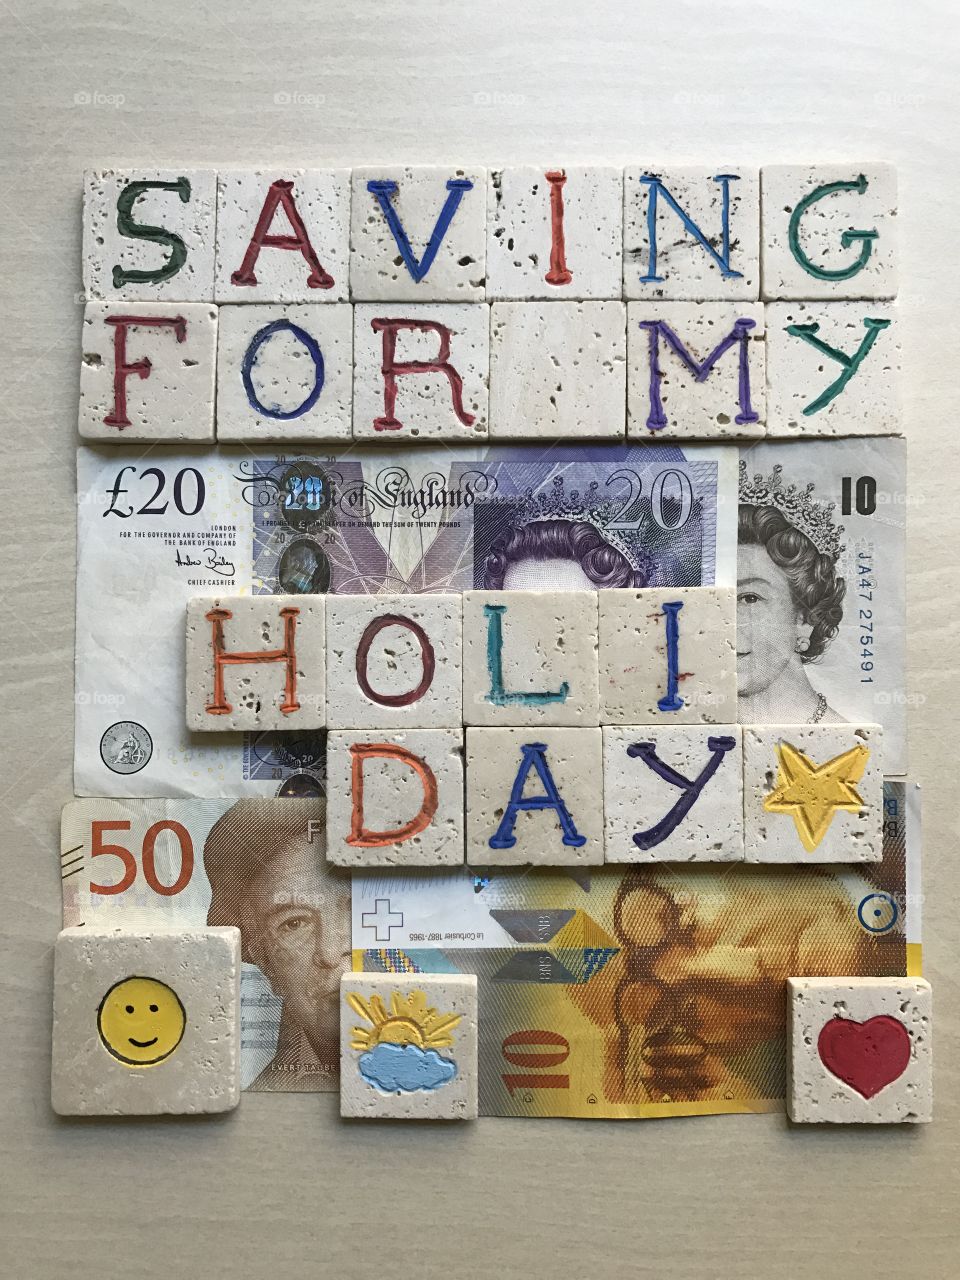 Saving for my holidays 